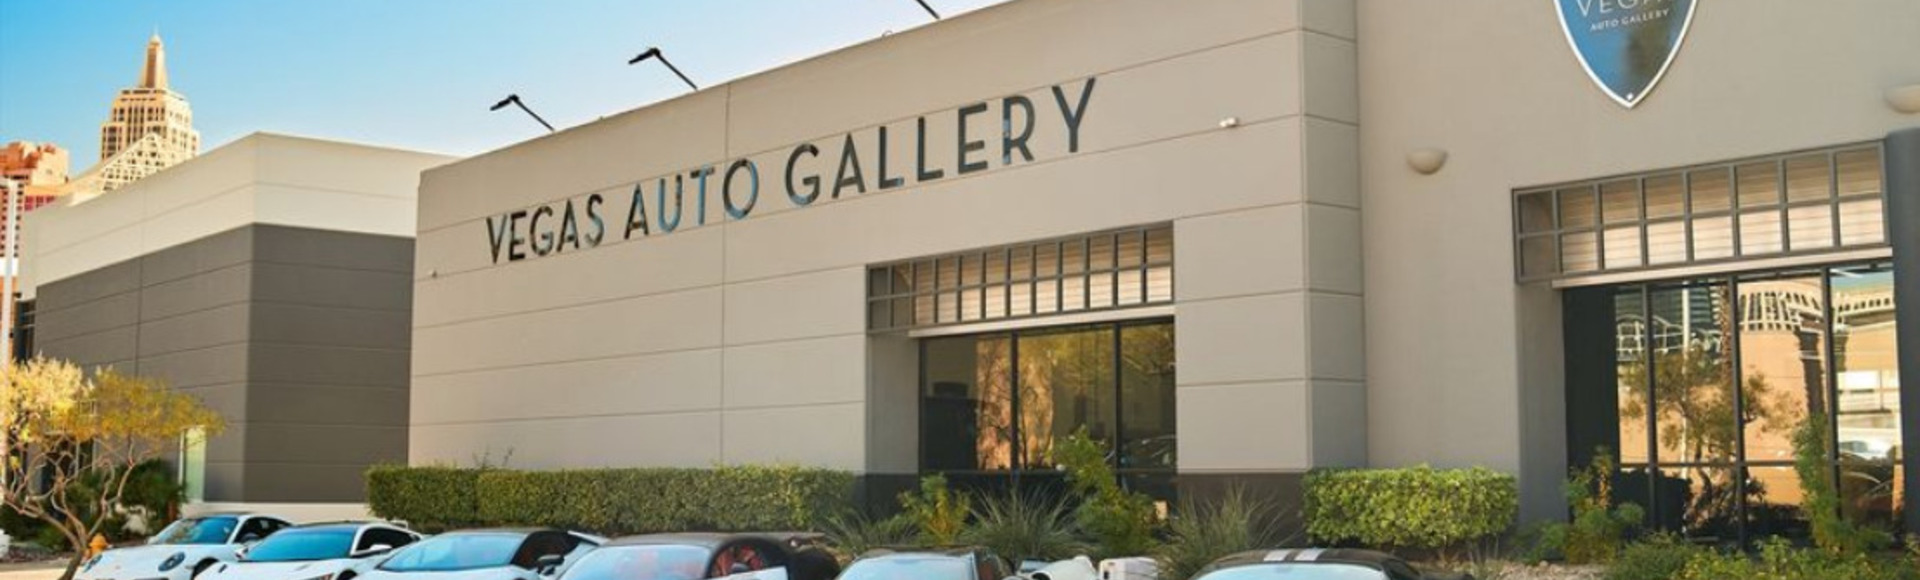 Vegas Auto Gallery